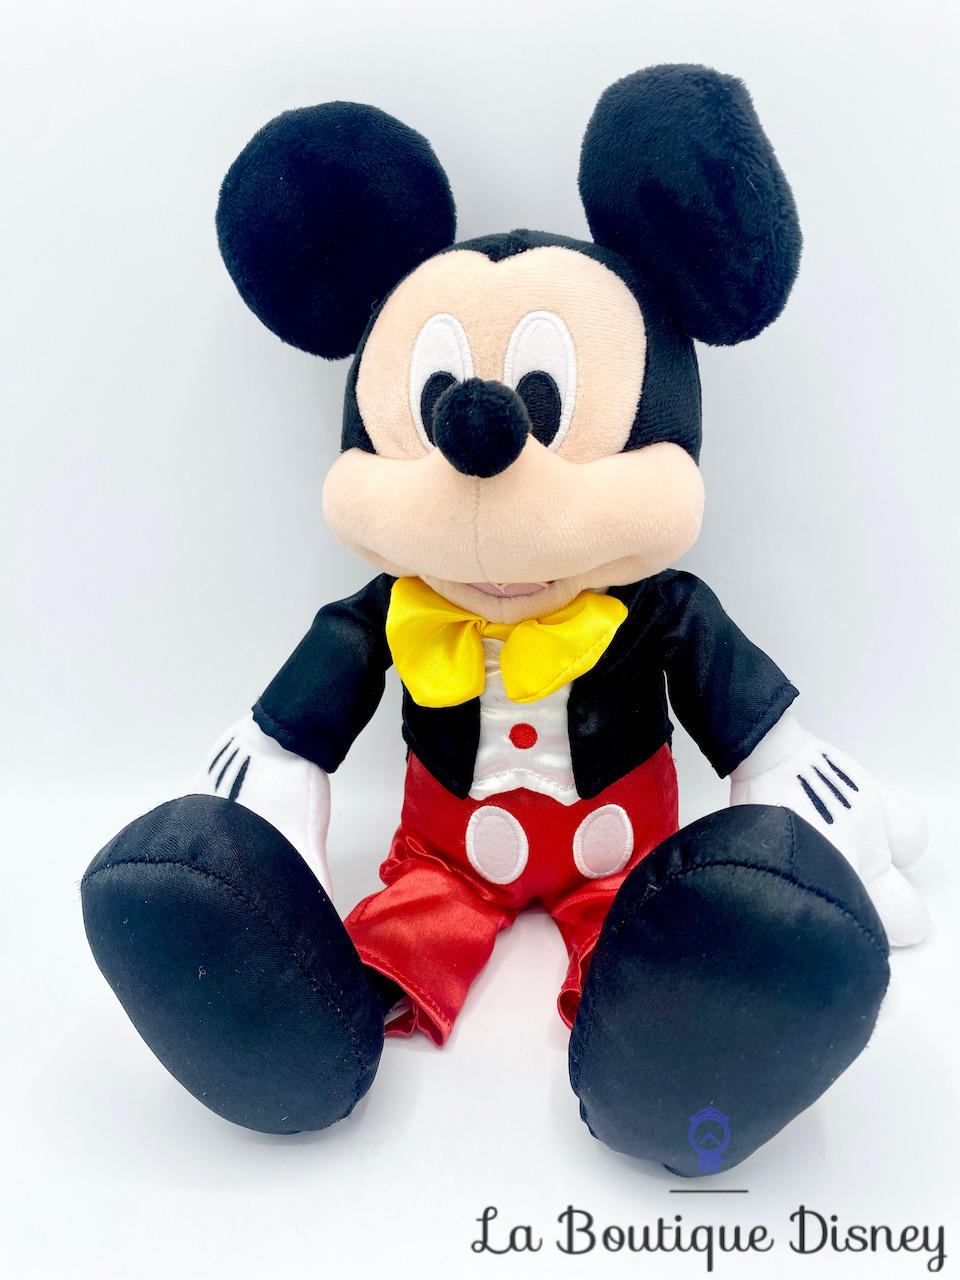 Peluche Mickey Mouse Disney de Disneyland Paris